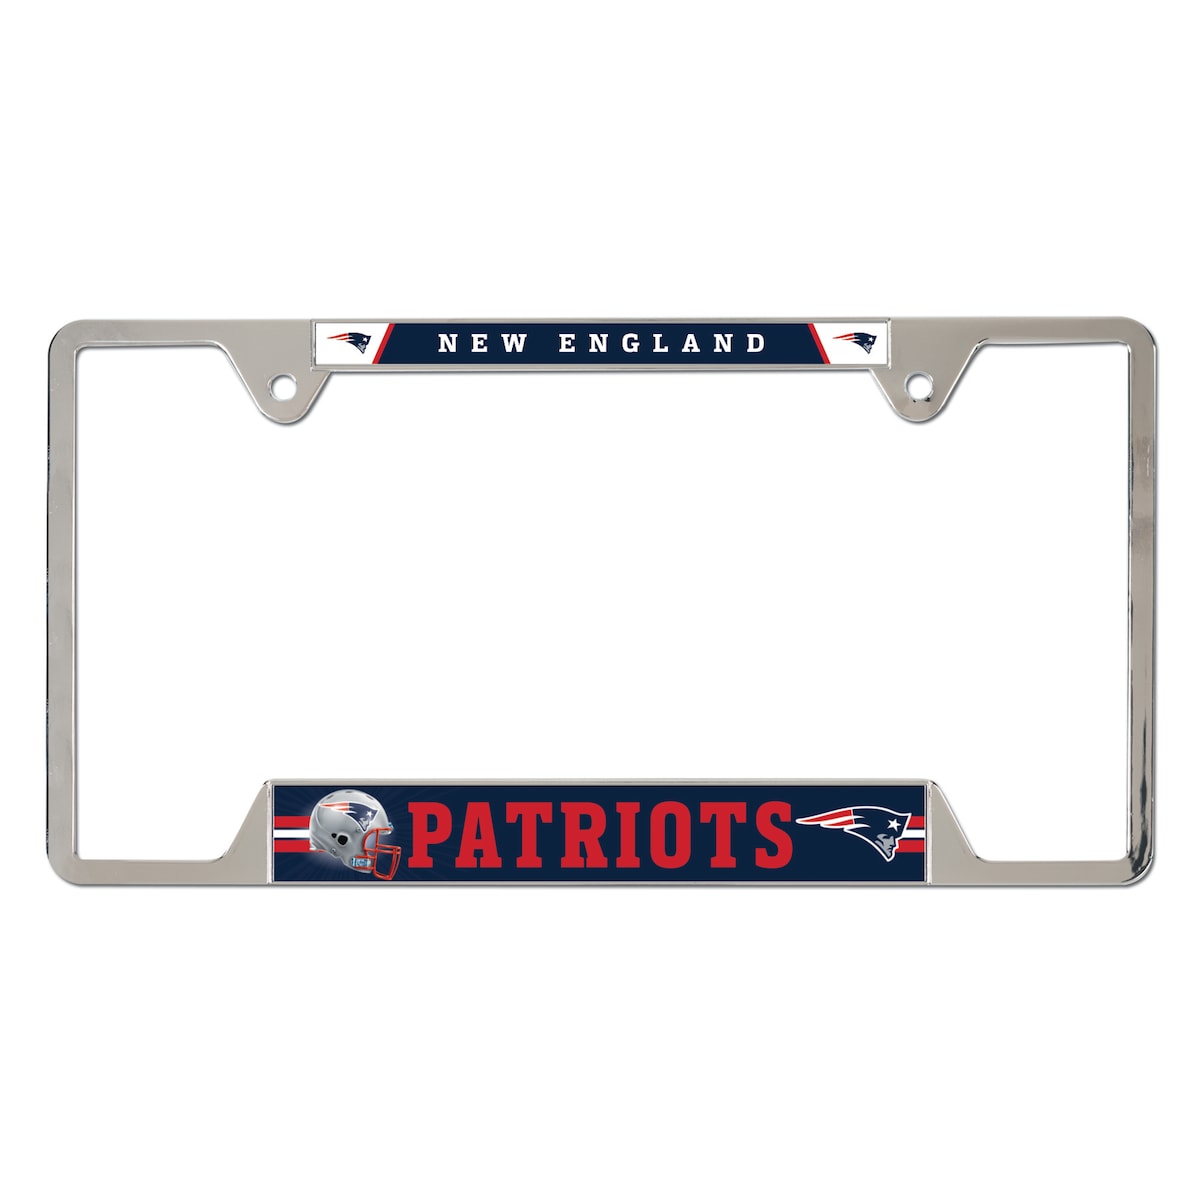 NFL ペイトリオッツ カー用品・カーアクセサリー ウィンクラフト (Metal License Plate Frame - NEW)